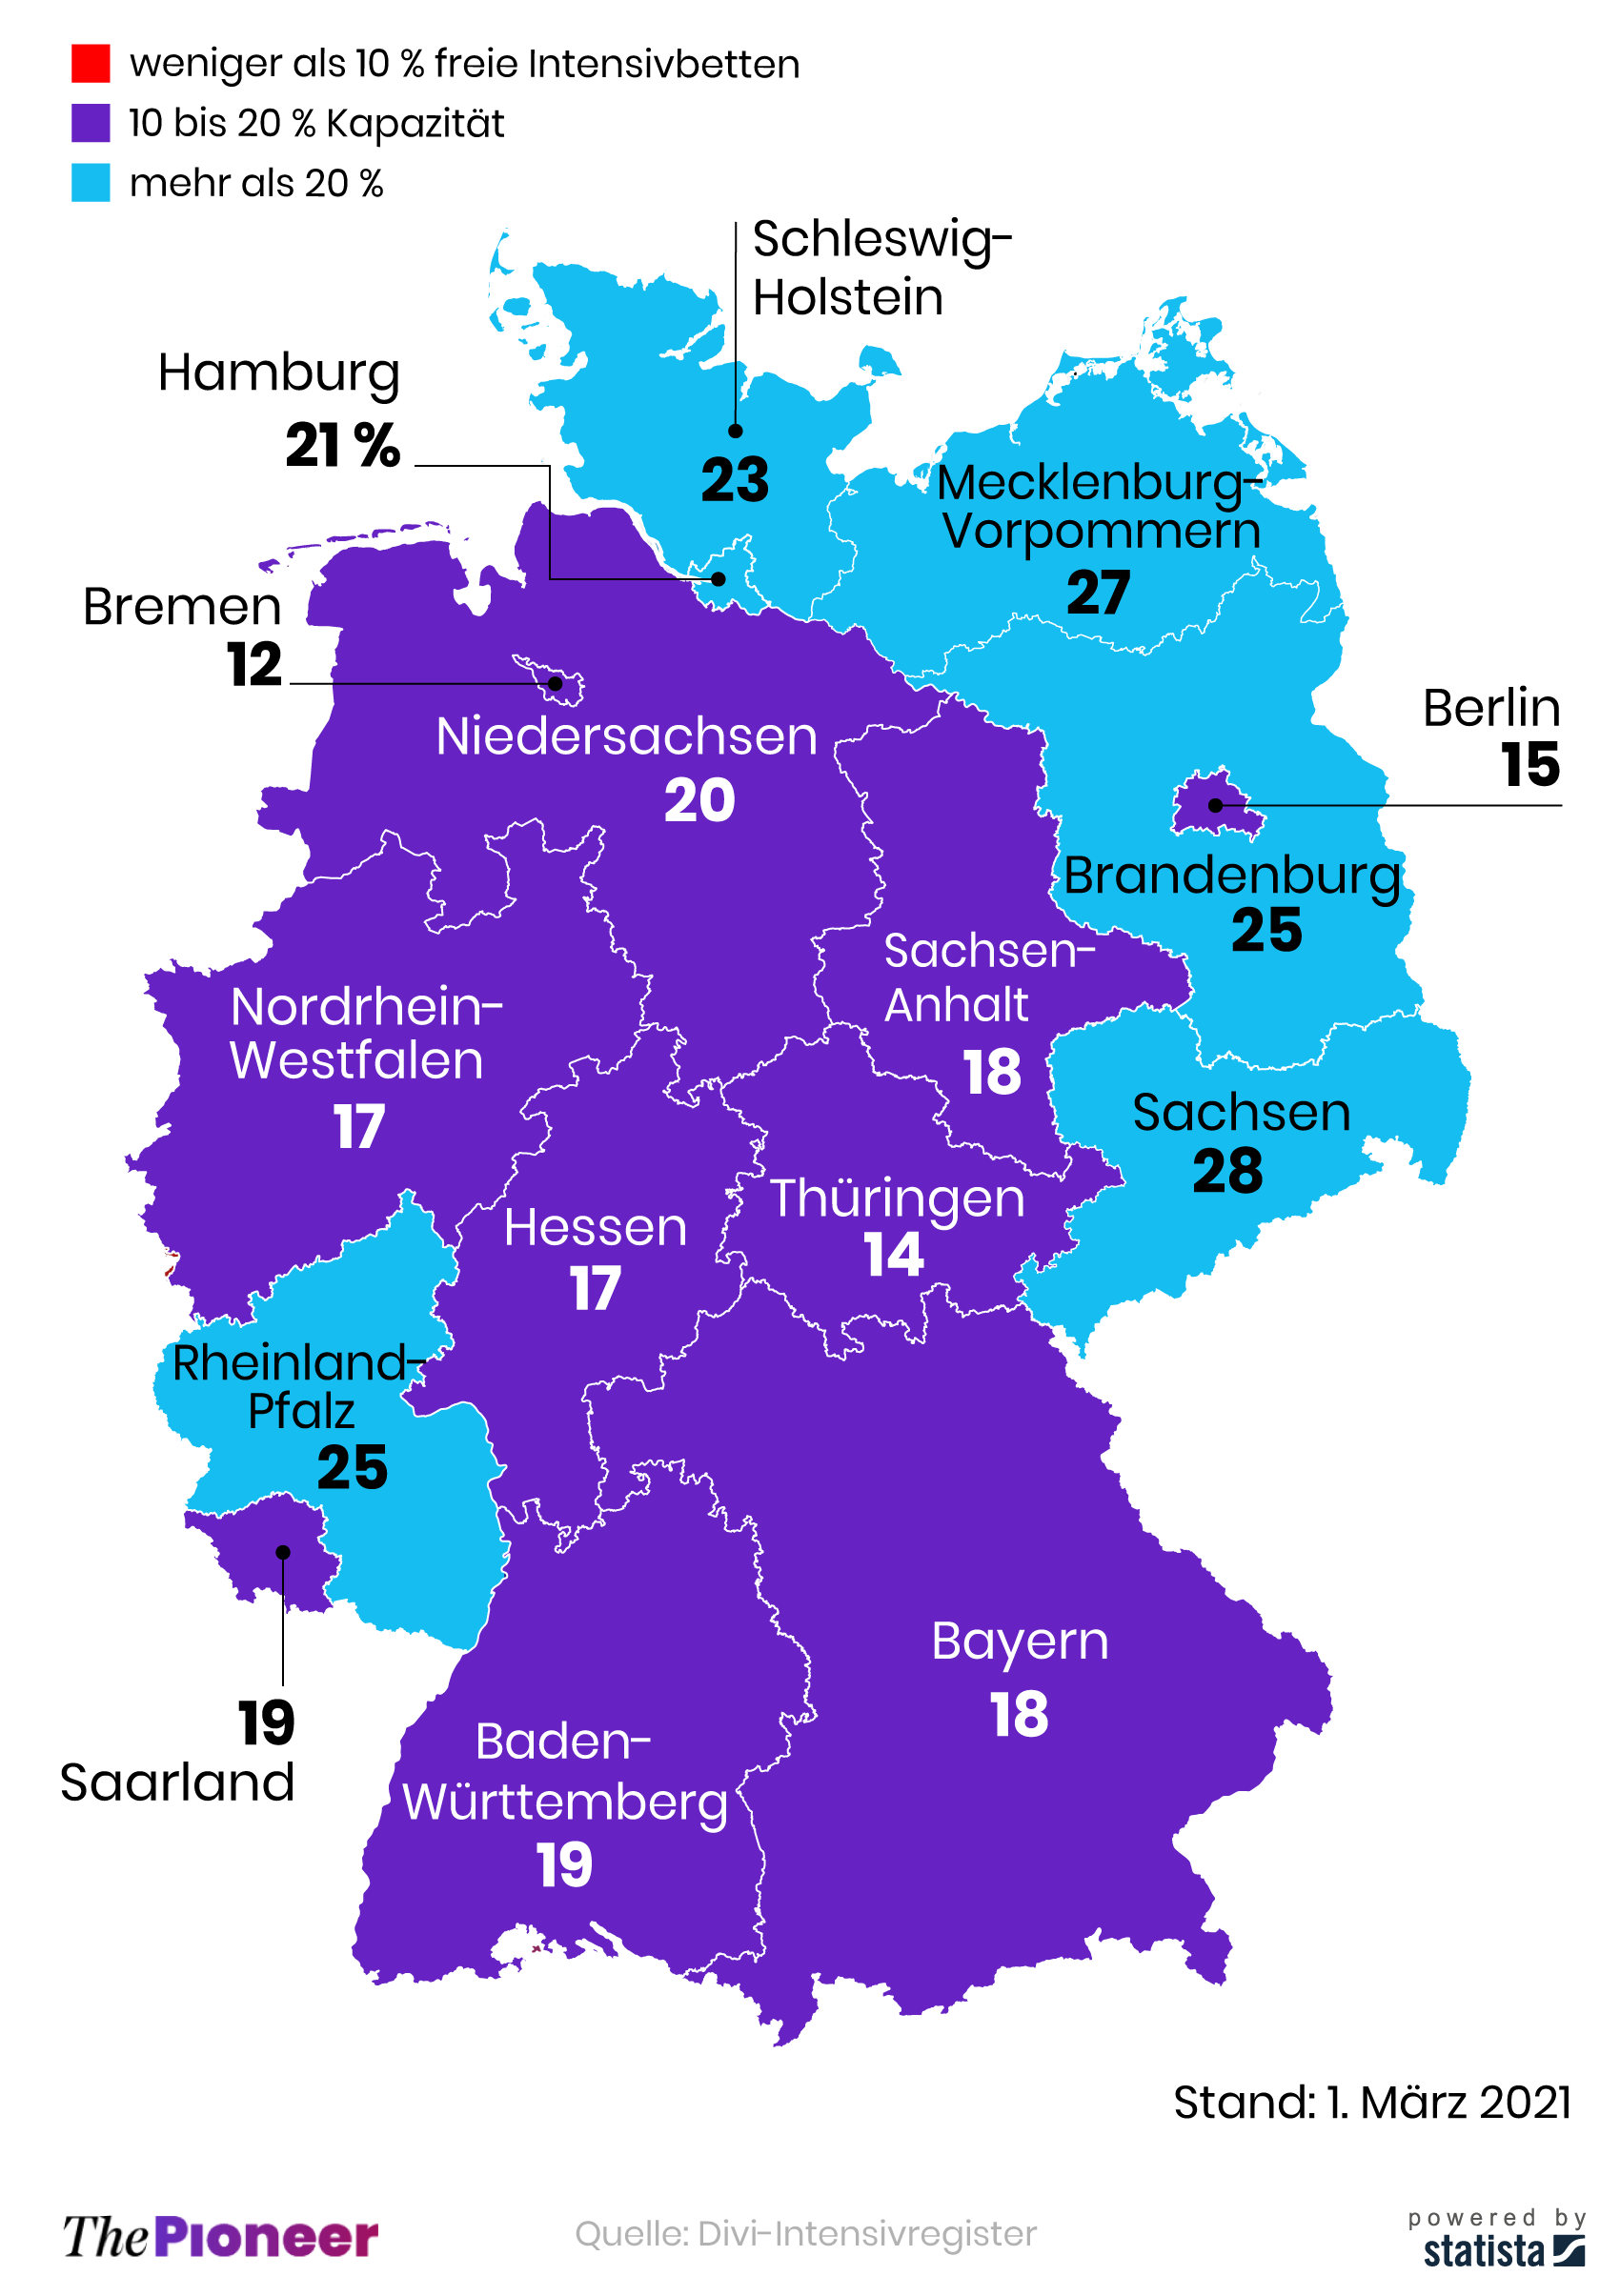 Freie Intensivbetten pro Bundesland, in Prozent